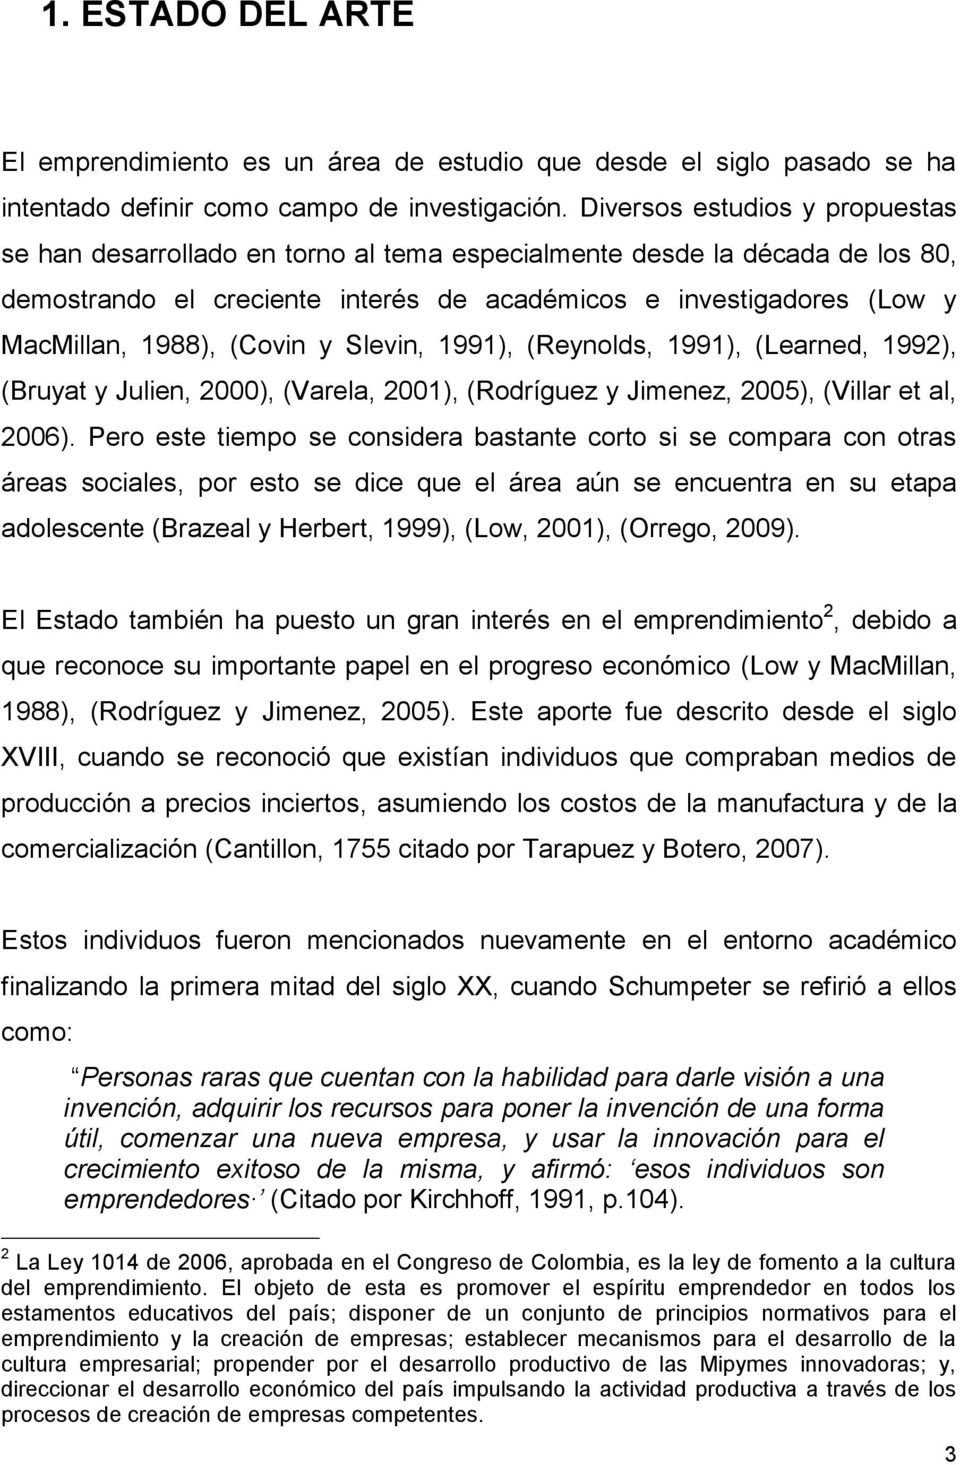 (Covin y Slevin, 1991), (Reynolds, 1991), (Learned, 1992), (Bruyat y Julien, 2000), (Varela, 2001), (Rodríguez y Jimenez, 2005), (Villar et al, 2006).